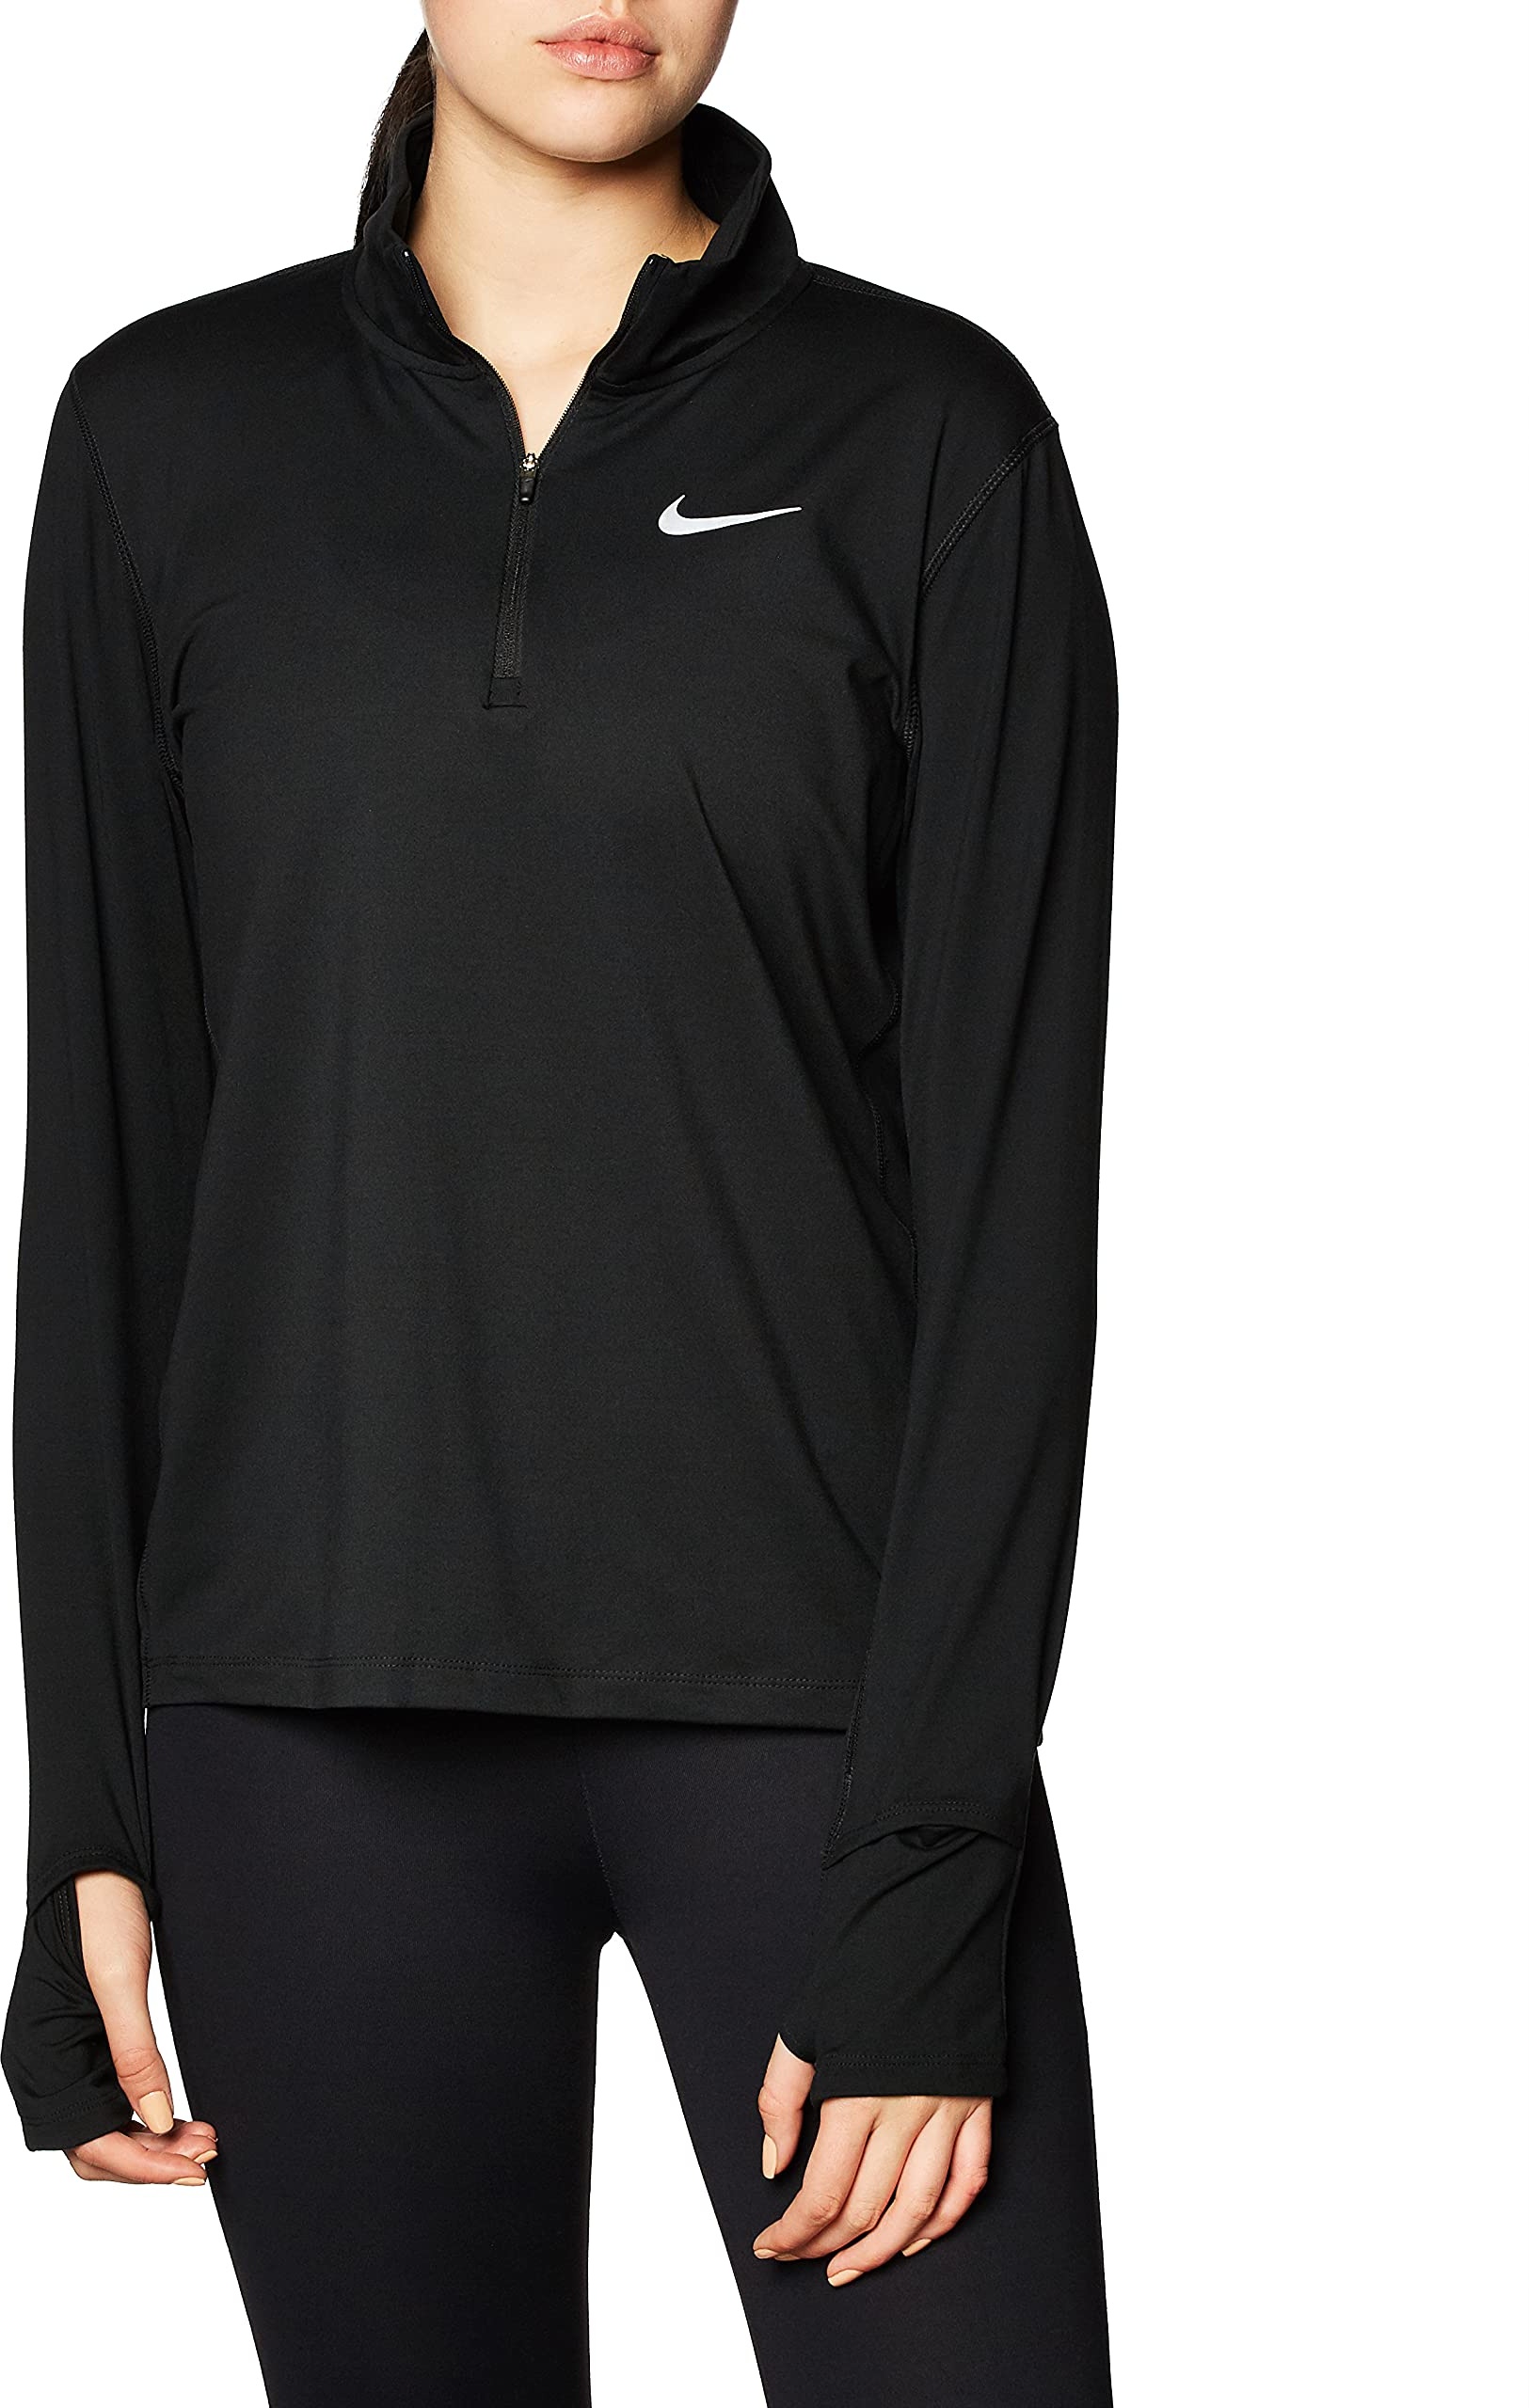 Nike Damen W Nk Element Top Hz Shirt, Black/Reflective Silv, S EU